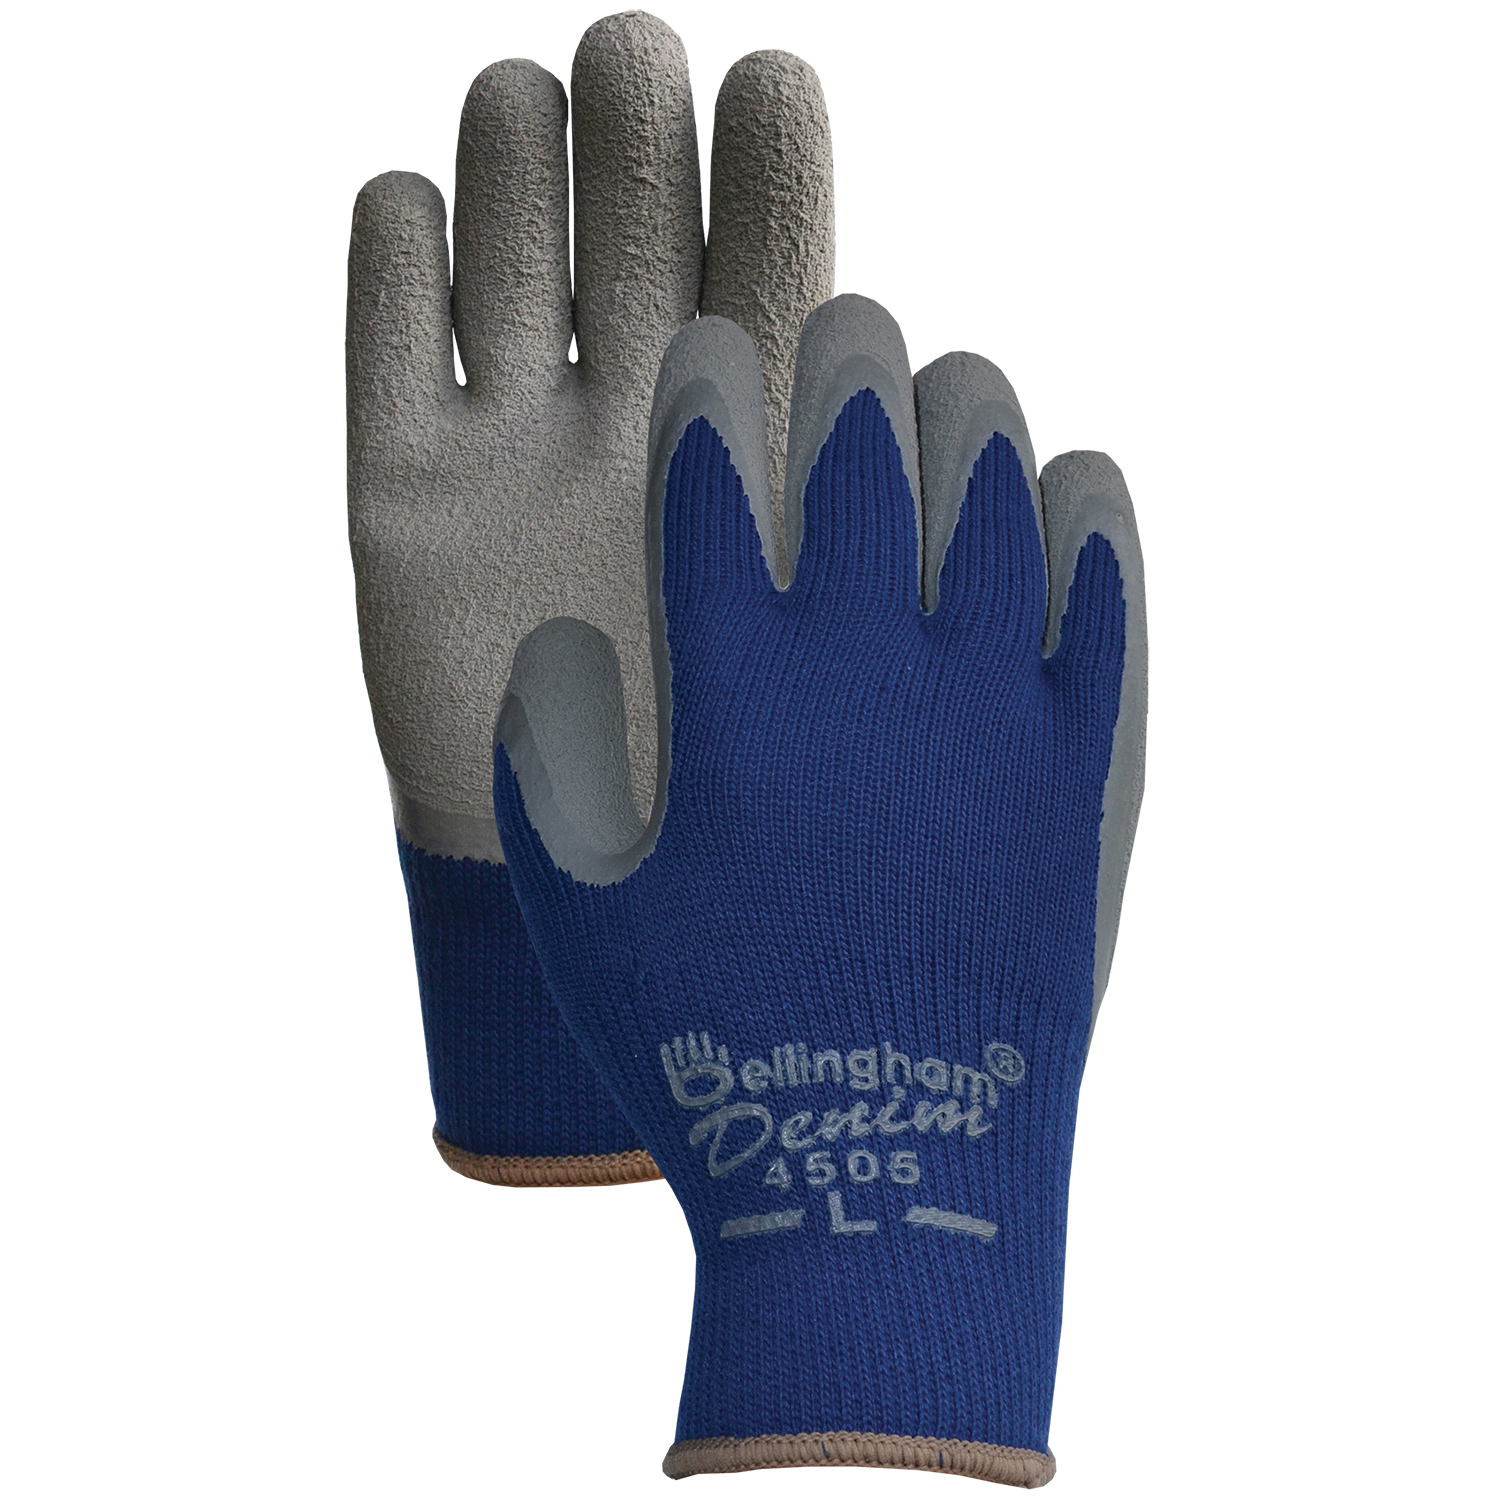 Bellingham C4505 Denim™ Work Glove